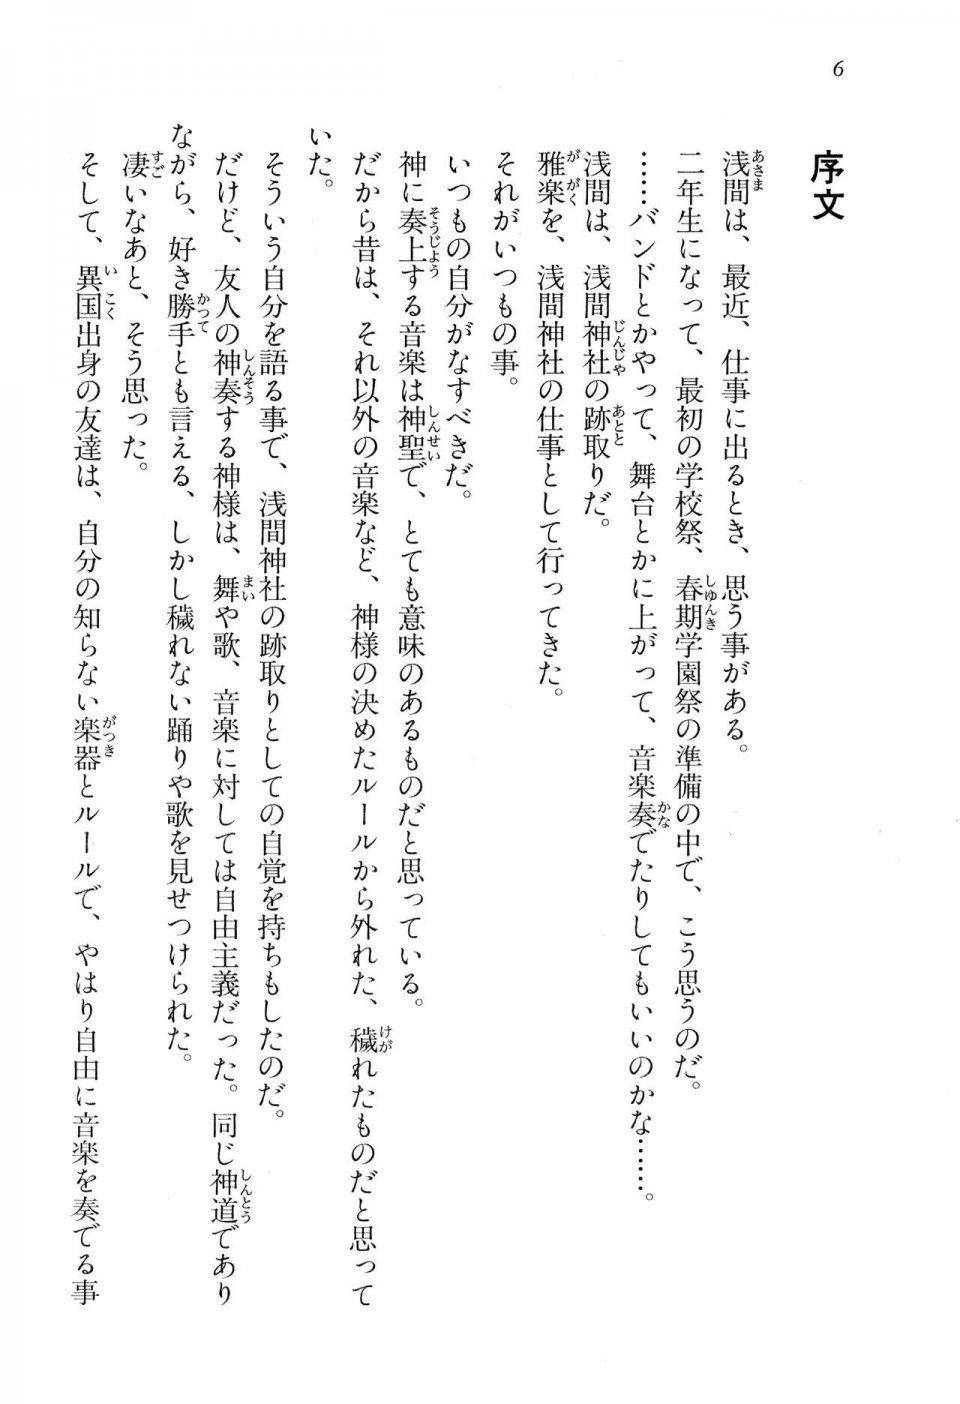 Kyoukai Senjou no Horizon BD Special Mininovel Vol 1(1A) - Photo #10